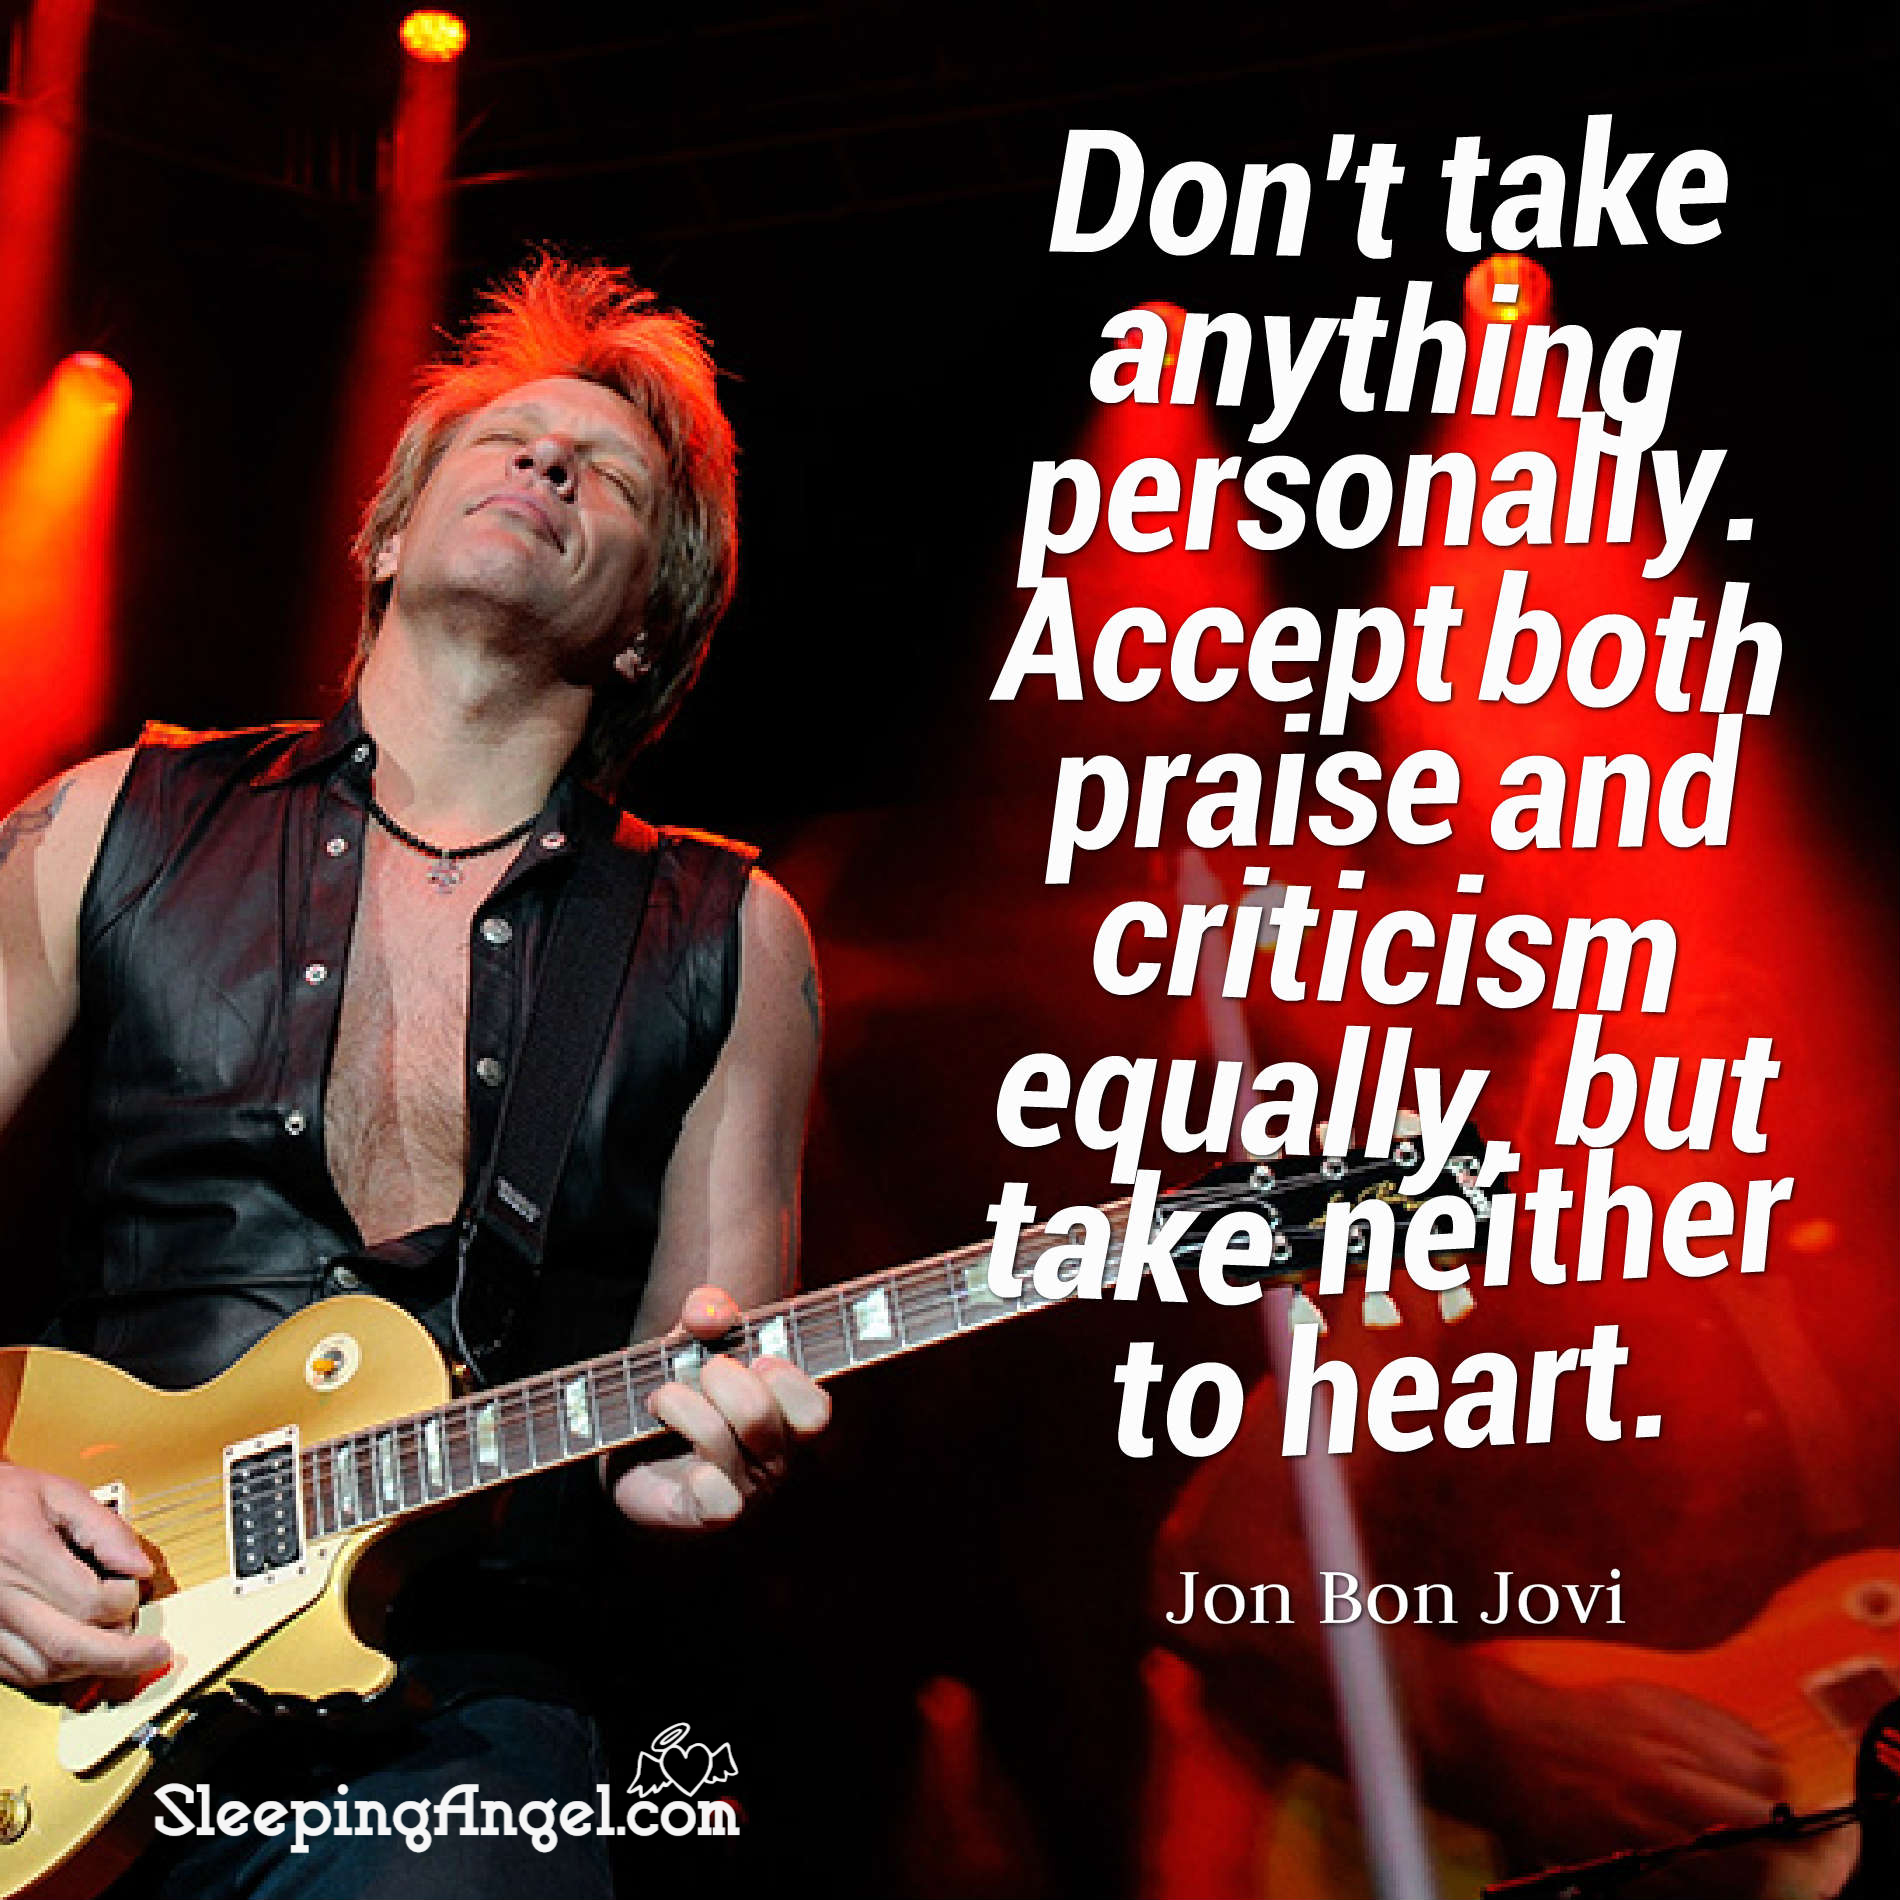 Jon Bon Jovi Quote